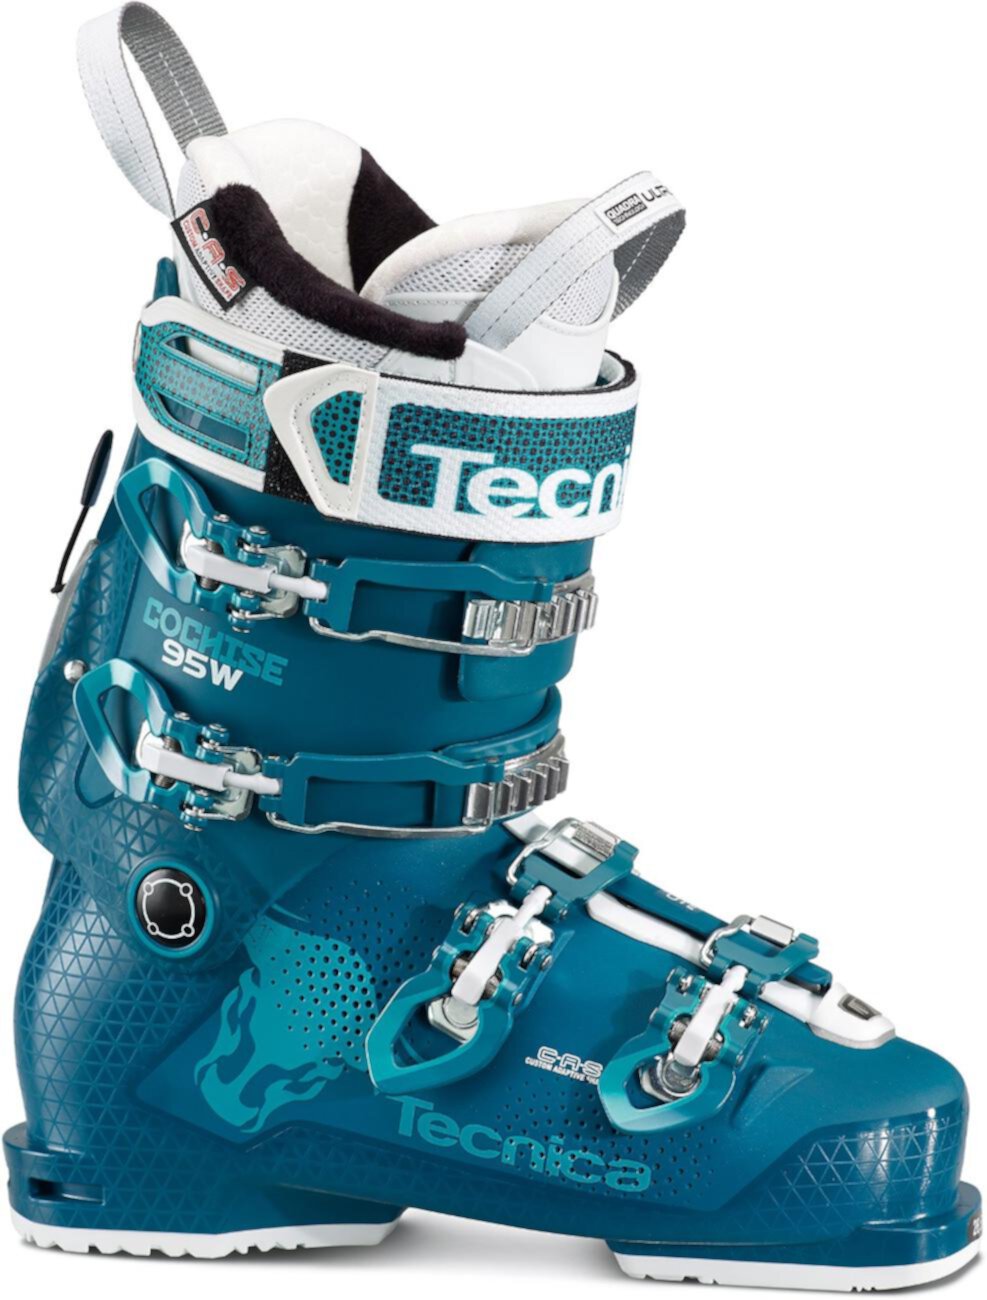 Cochise 95 Ski Boots - Women's - 2016/2017 Tecnica